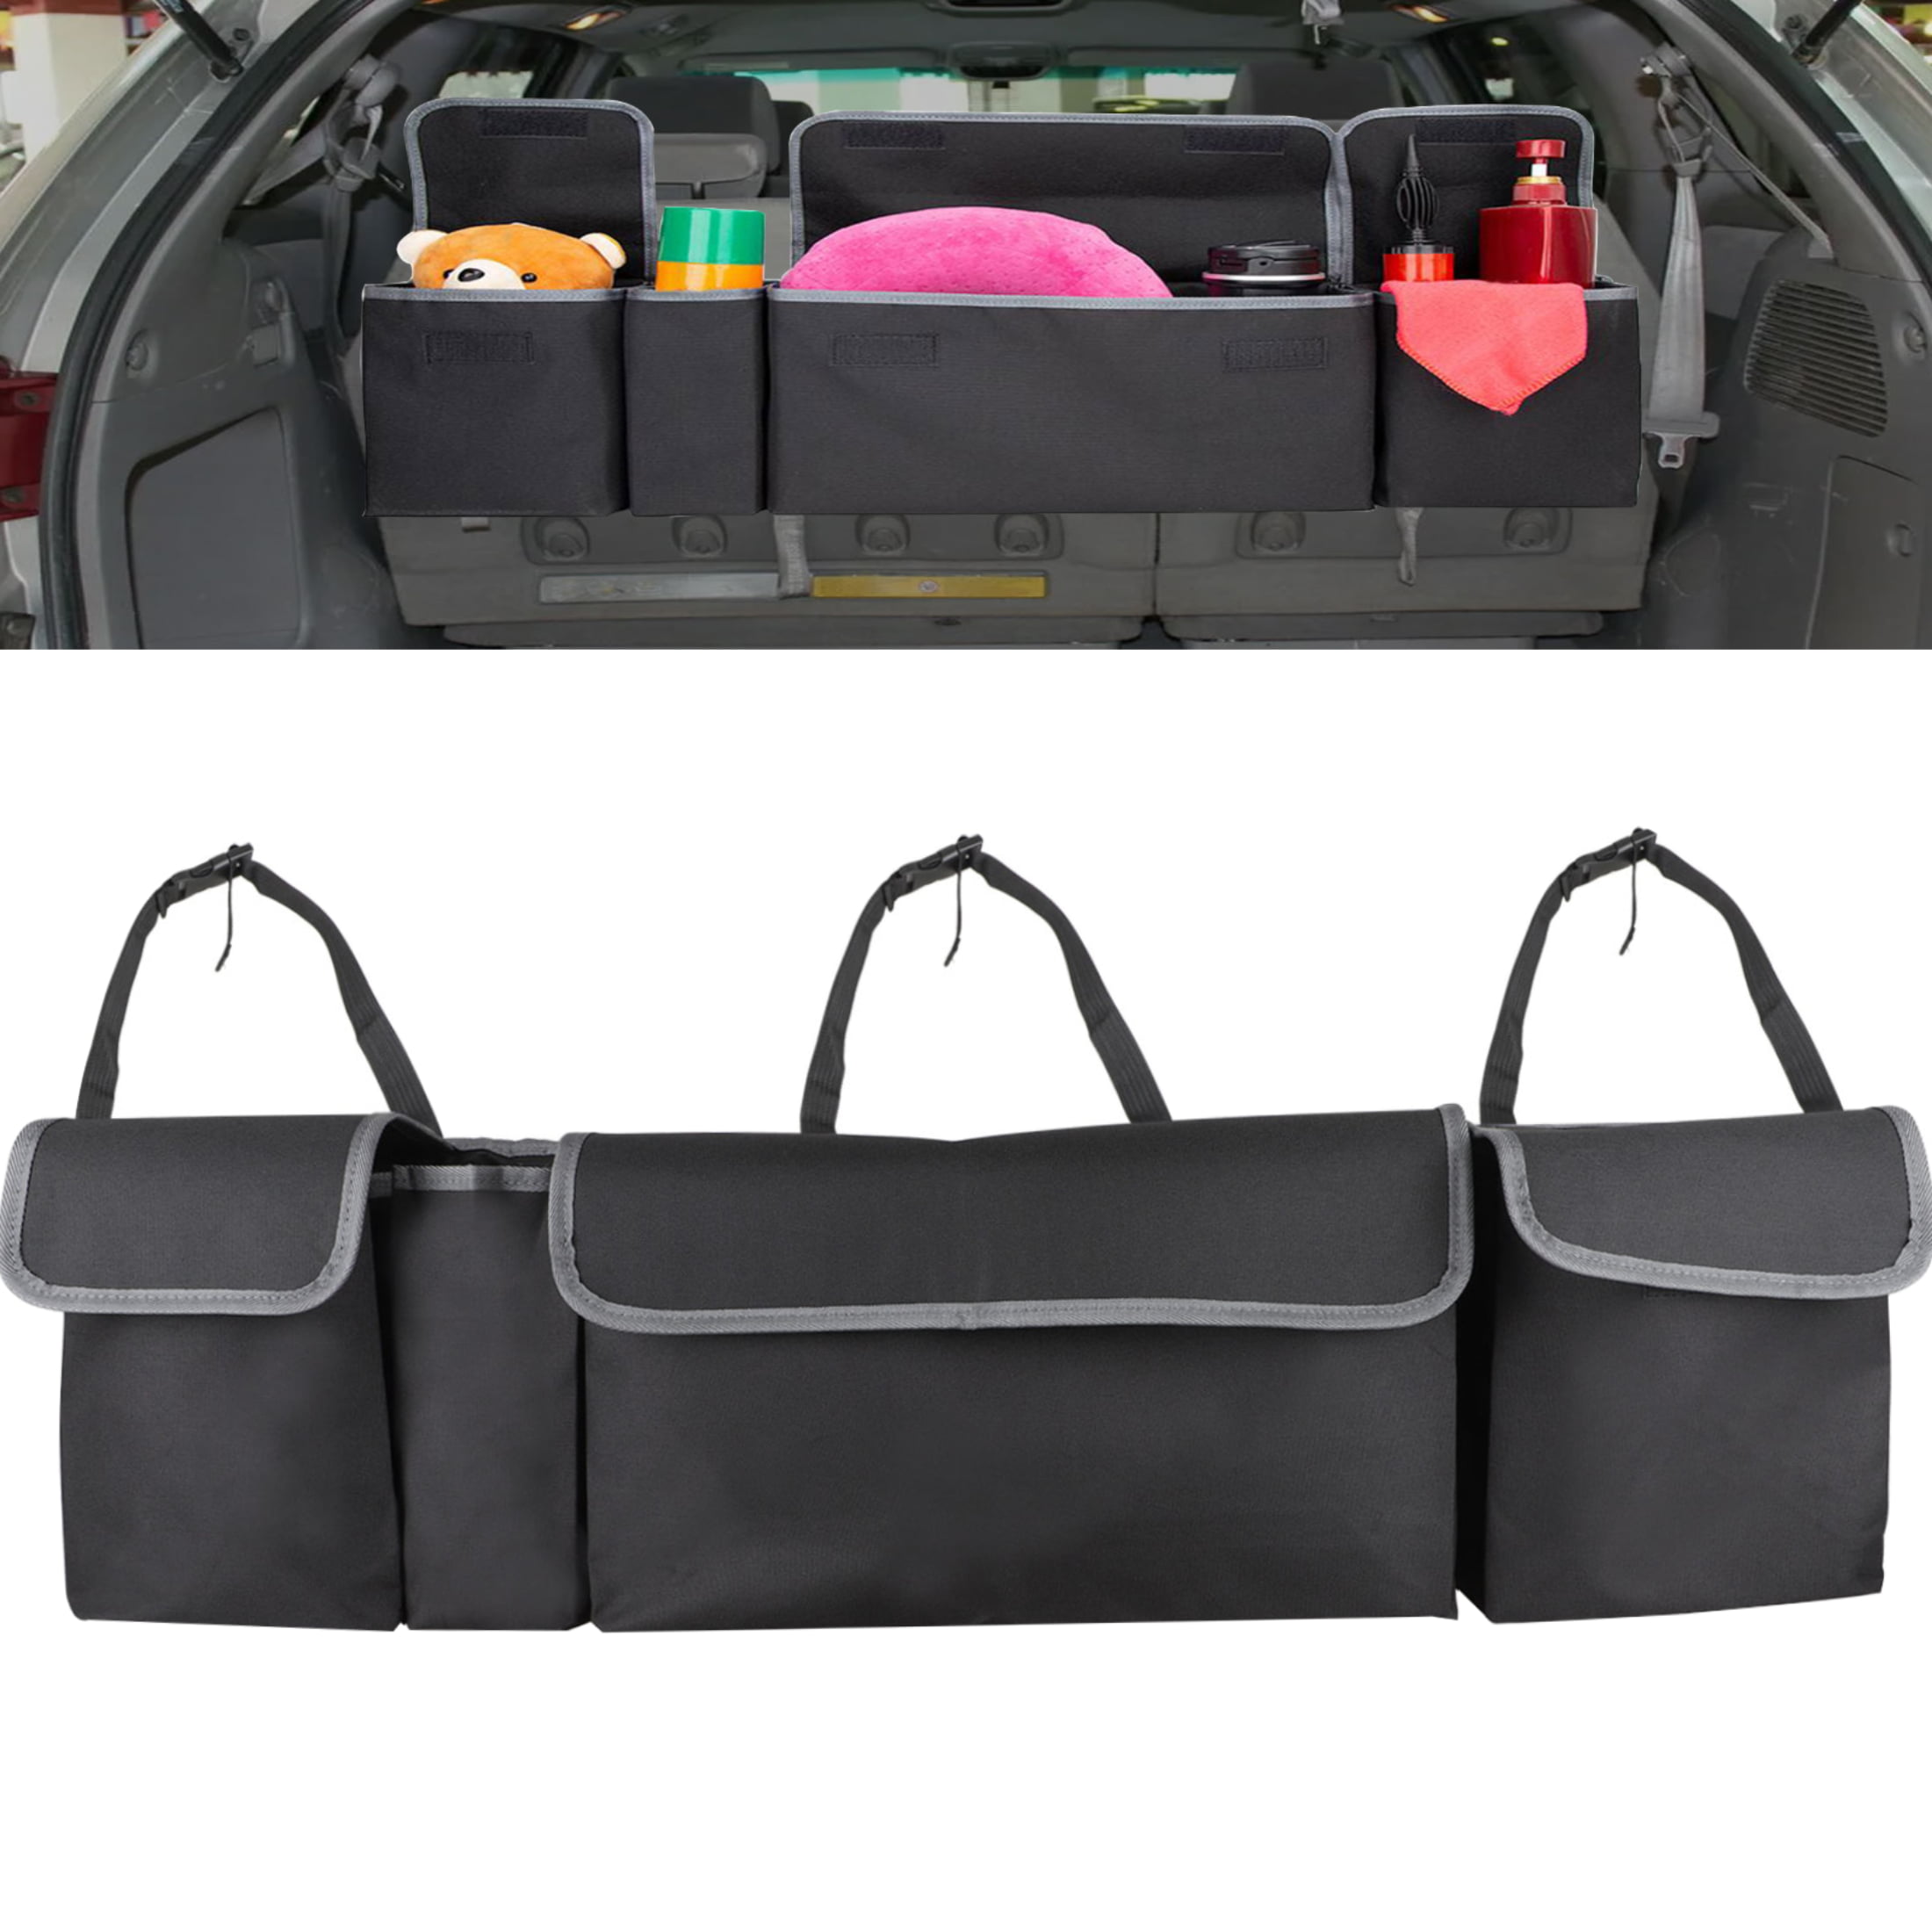 6 Storage Pocket Organizers Car Backseat Organizer Store On The Go Essentials 